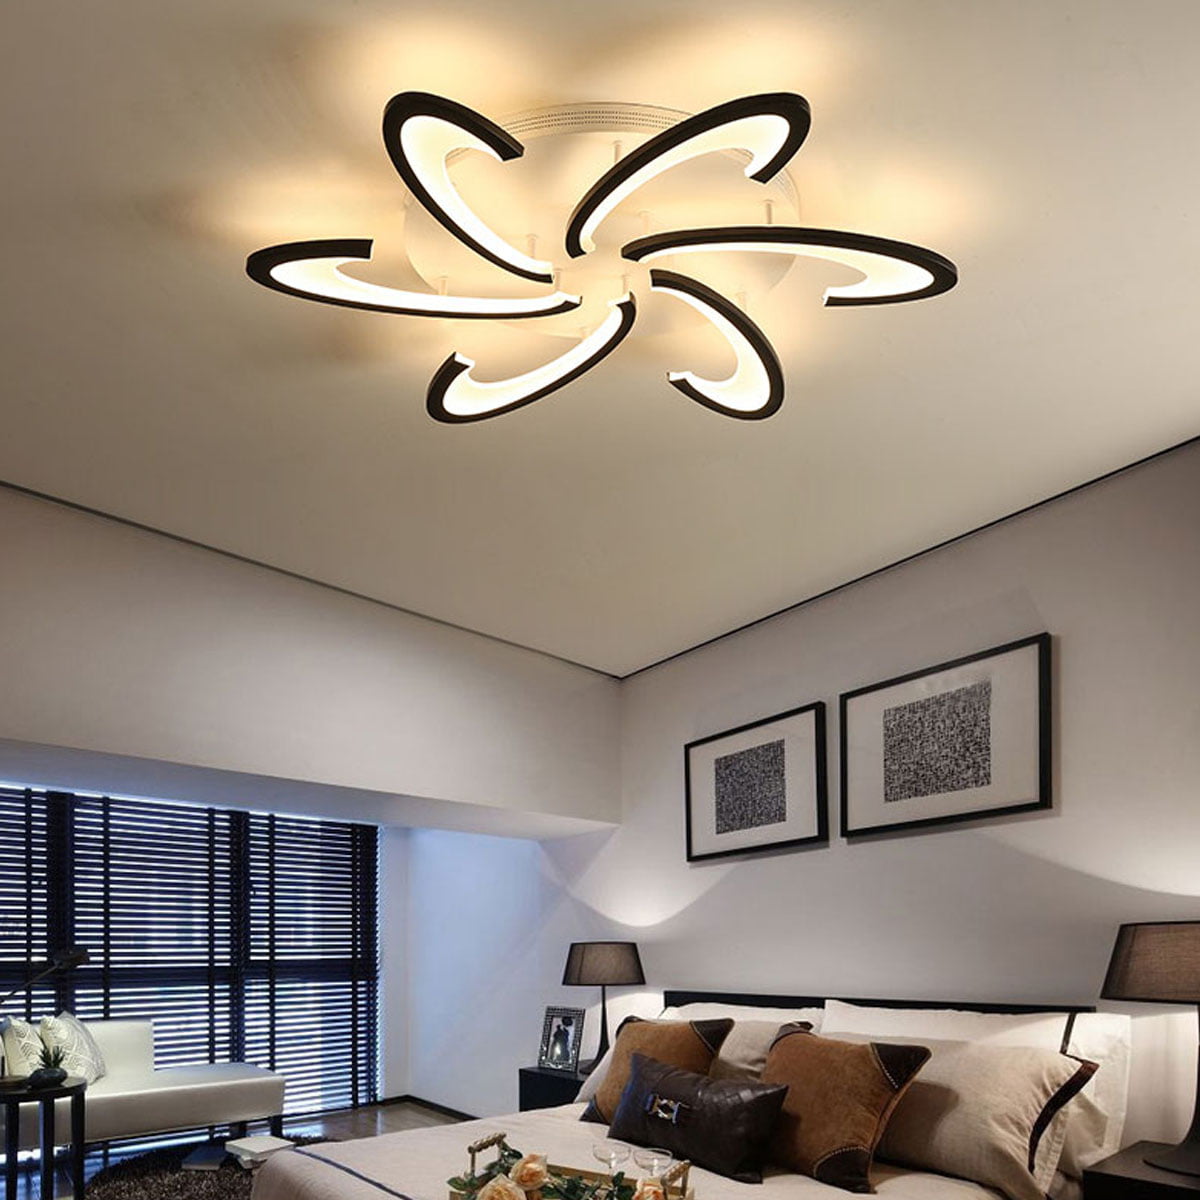 Iron and wood lamp modern LED Ceiling light  indoor home bedroom living room corridor aisle decoration illumination